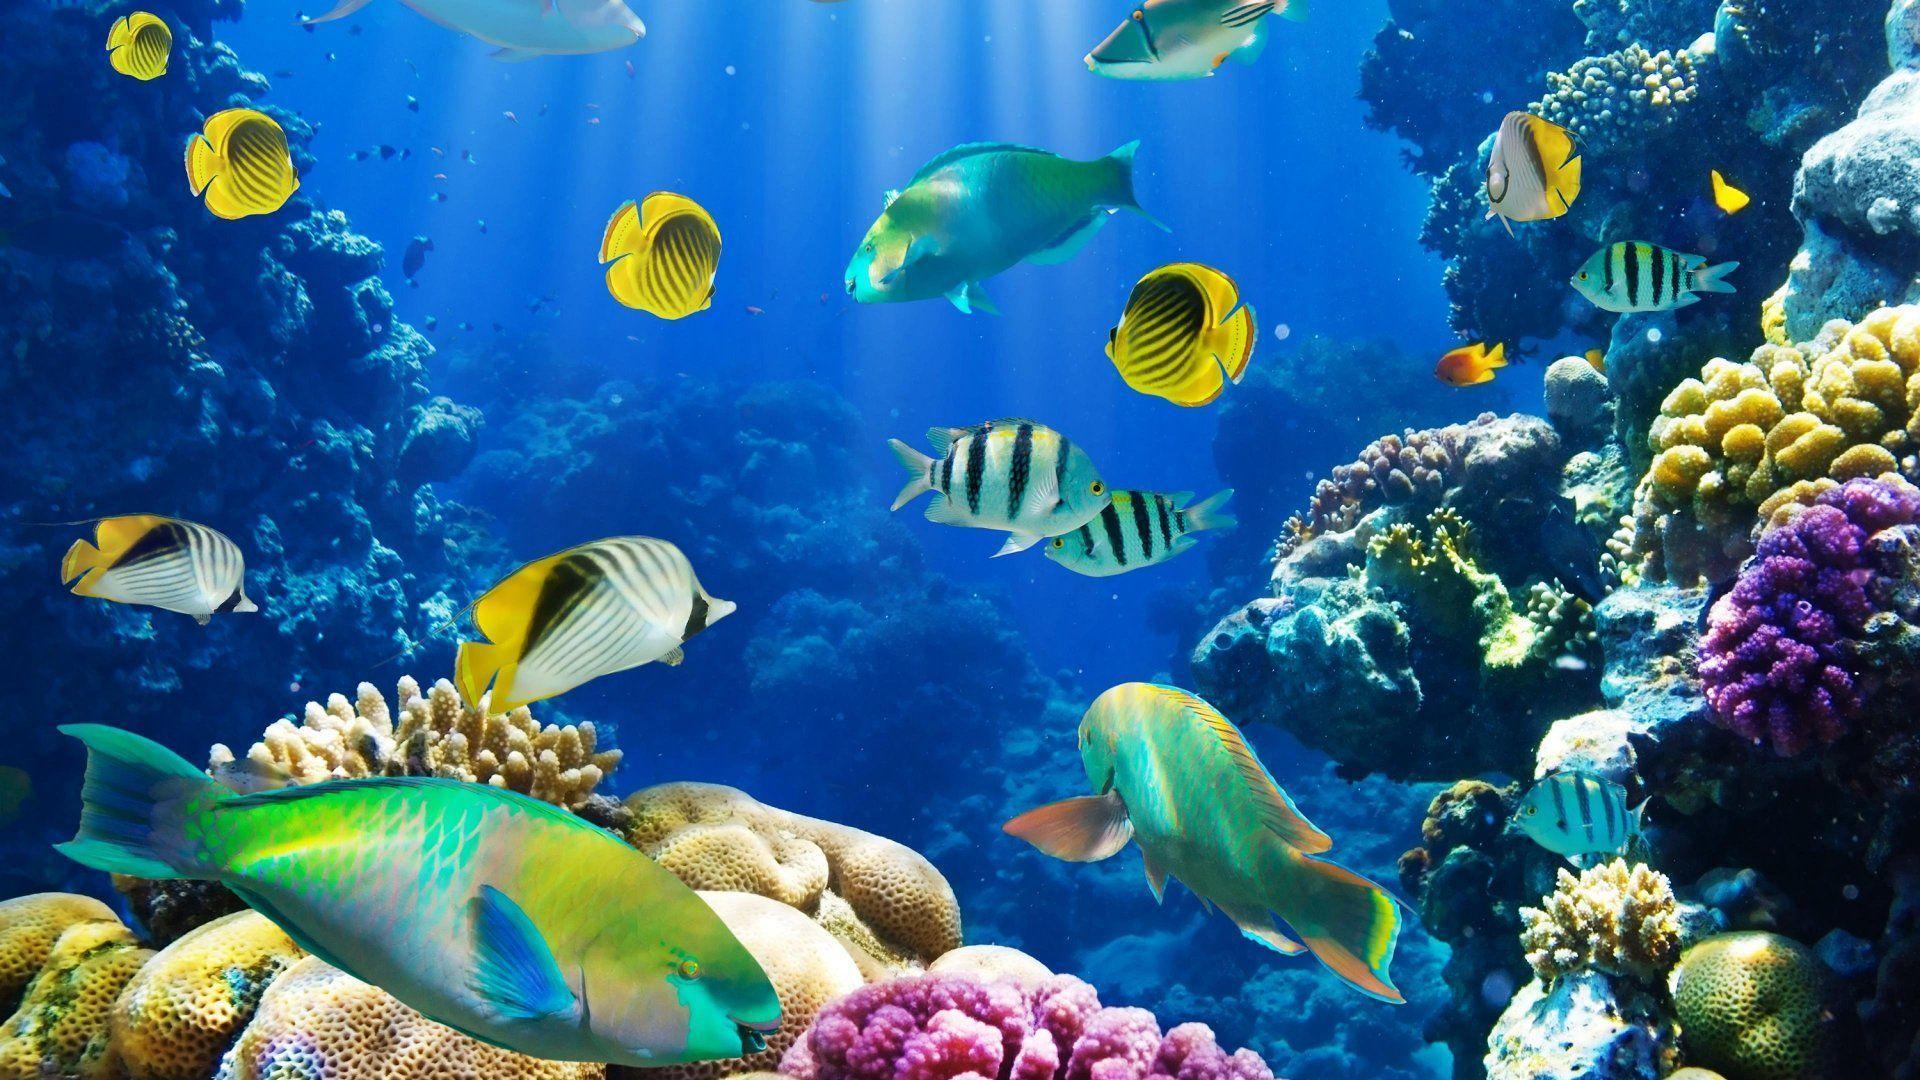 Ocean Fish Wallpaper HD. Wallpaper, Background, Image, Art Photo